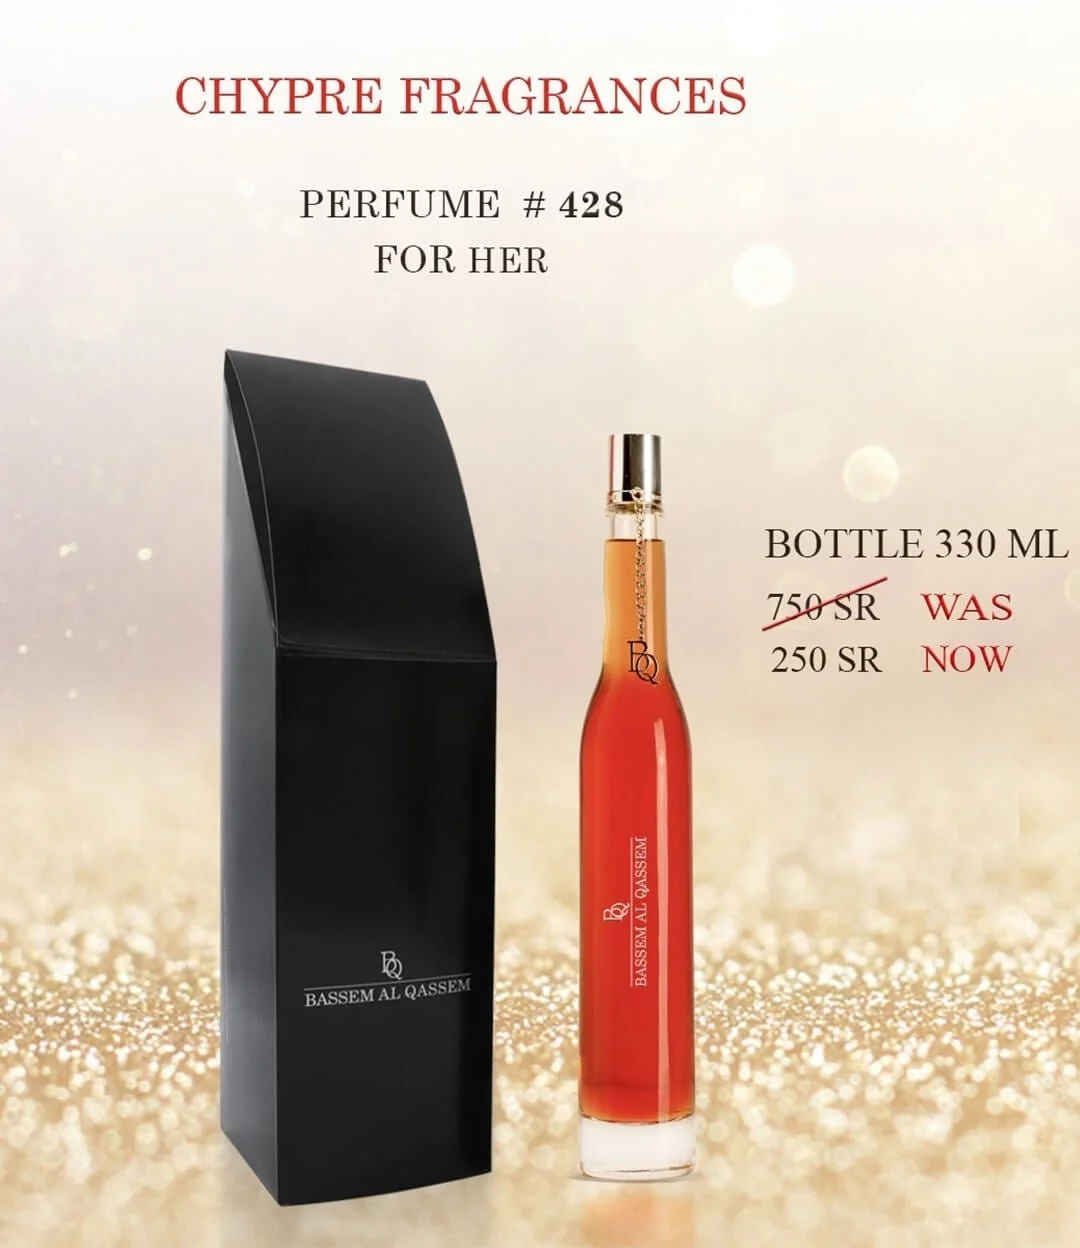 Perfume #428 Chypre Fragrance for Her by Bassem Al Qassem 